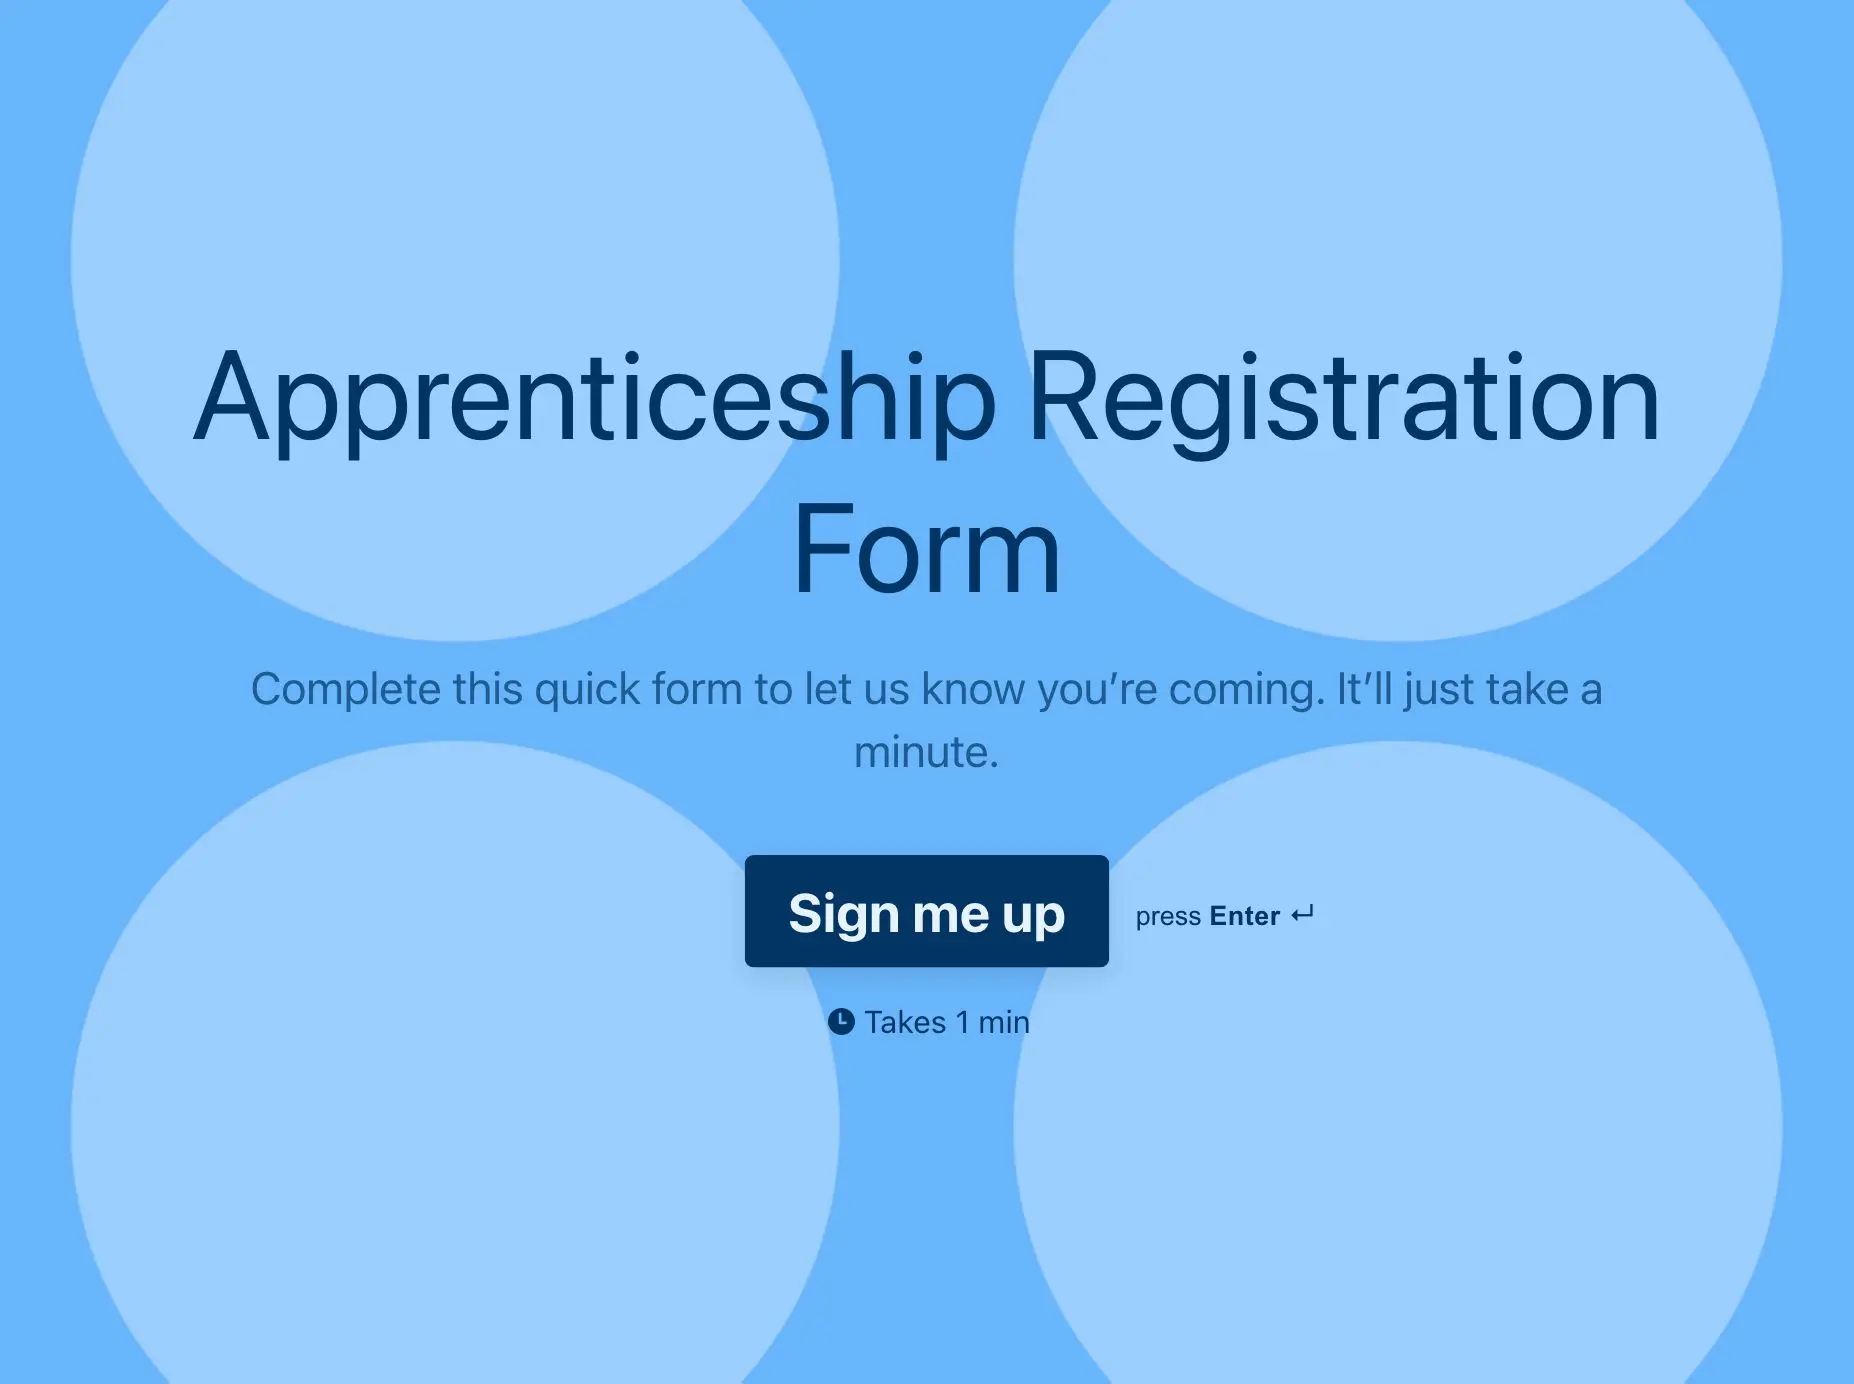 Apprenticeship Registration Form Template Hero